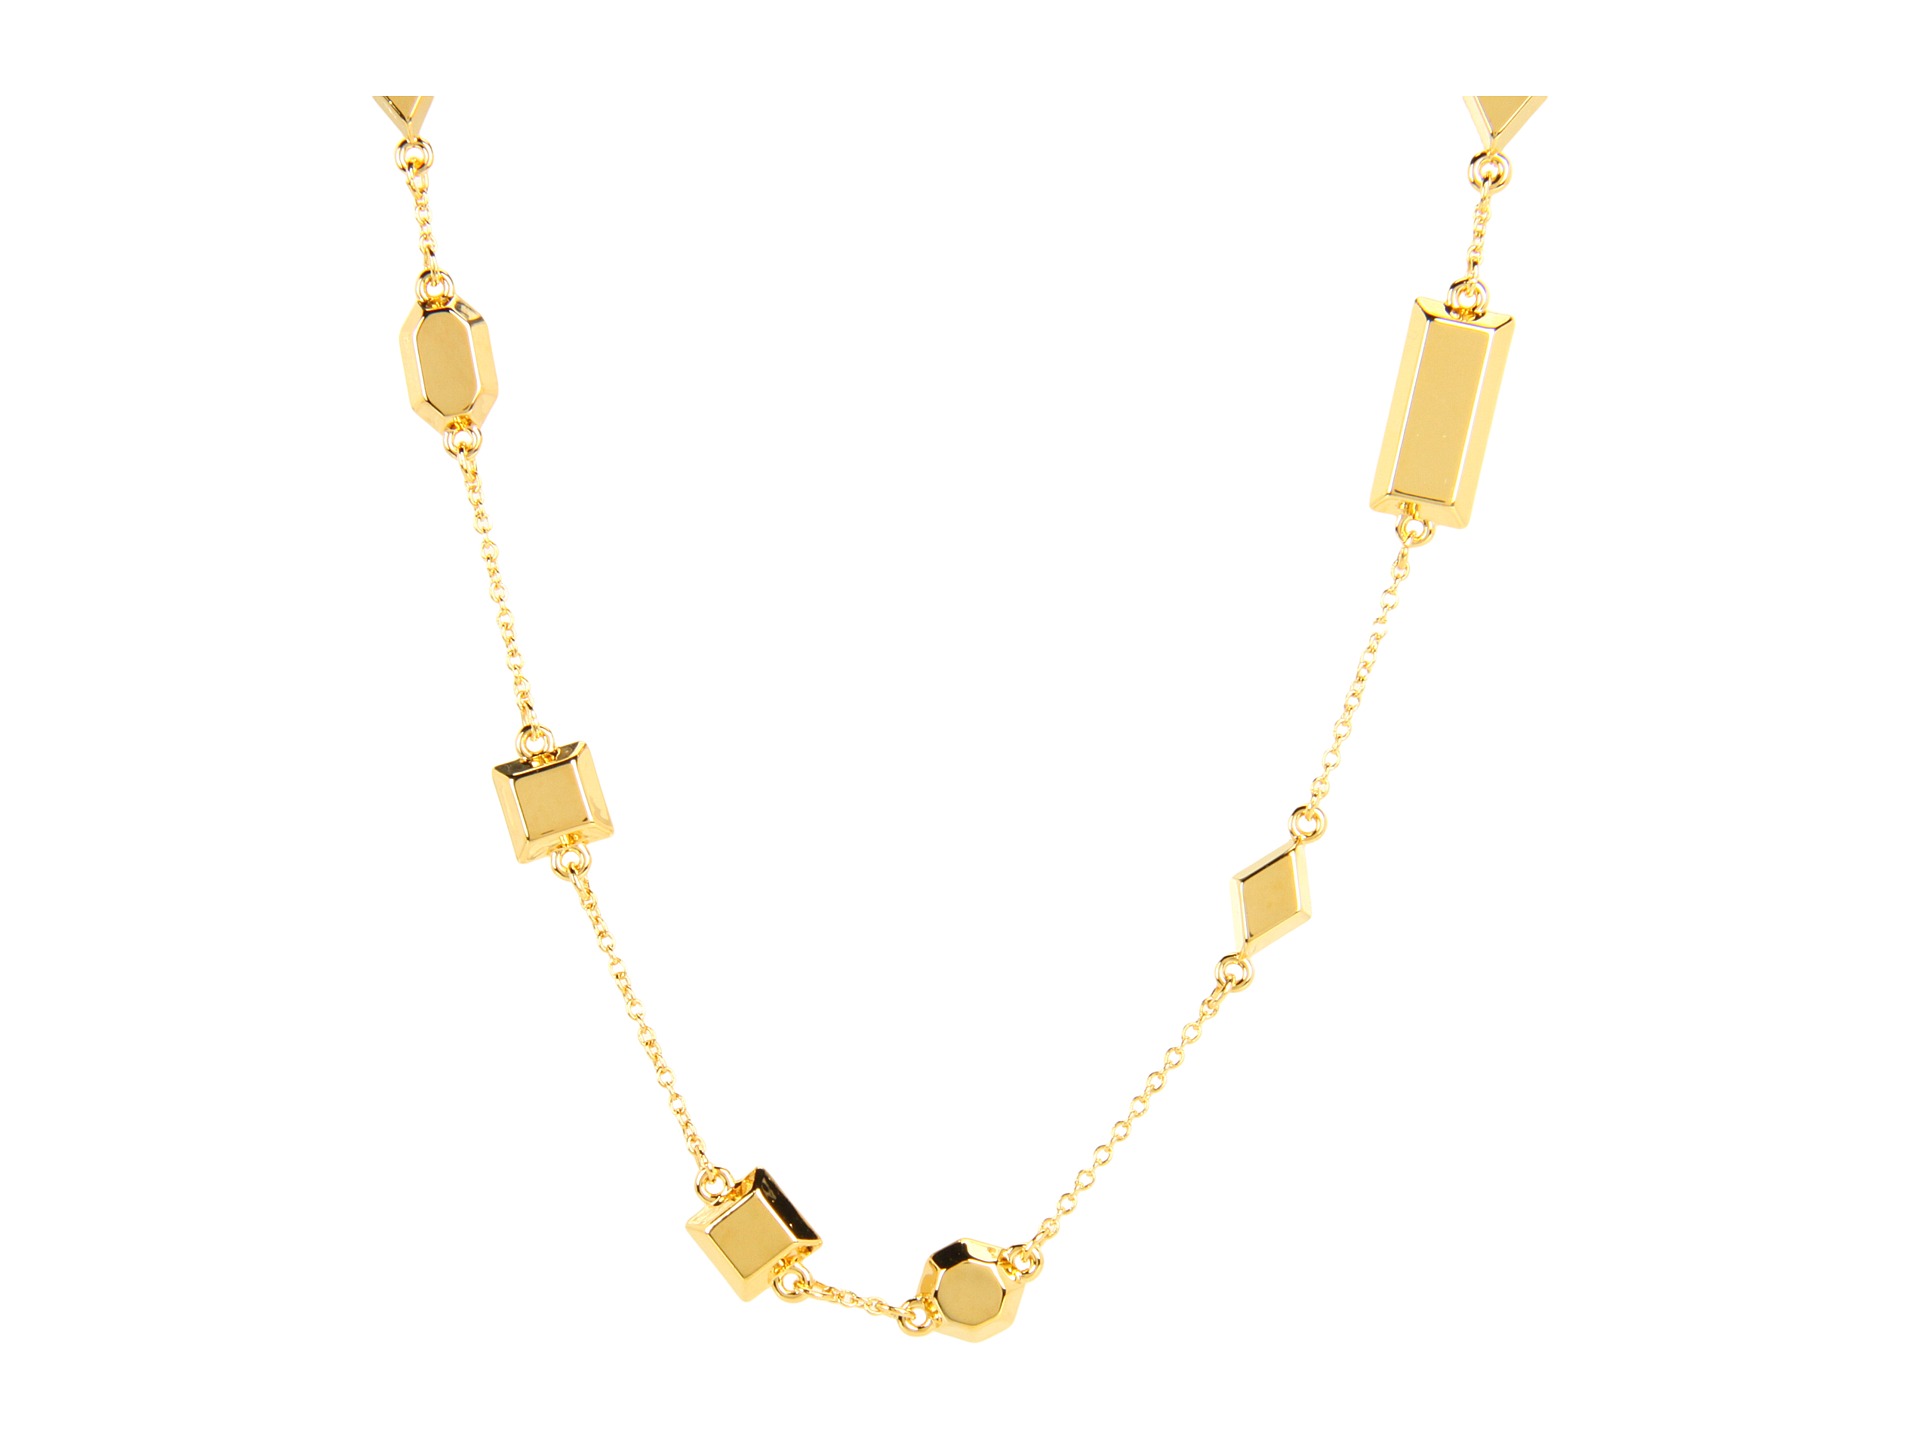 Kate Spade New York Jewelbar Scatter Necklace   